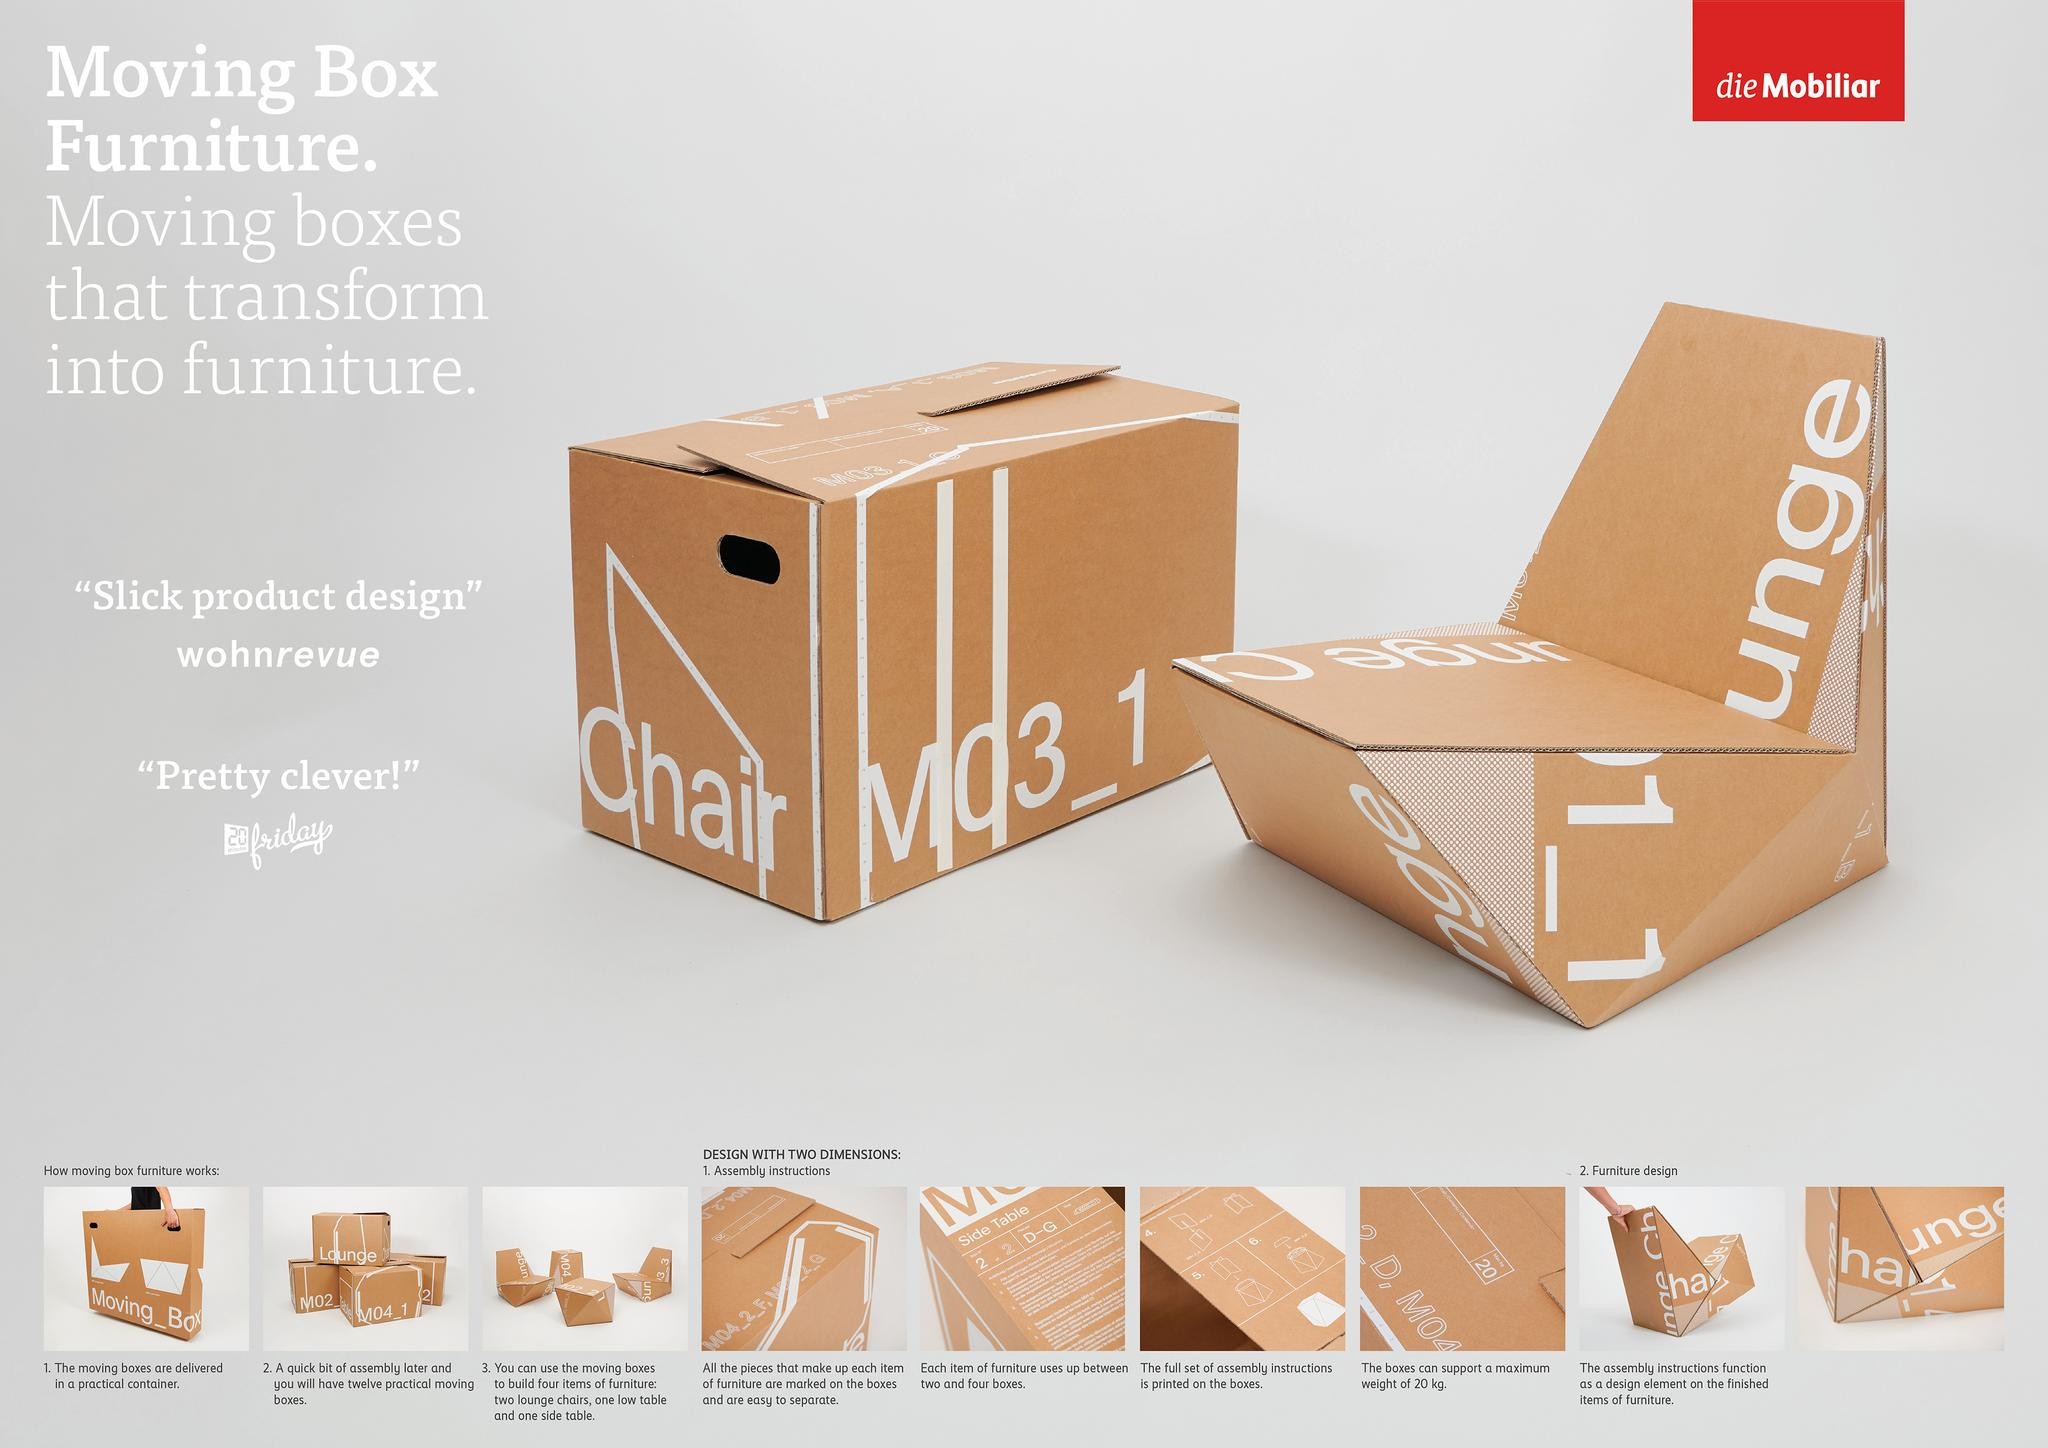 Mobiliar - Moving Box Furniture